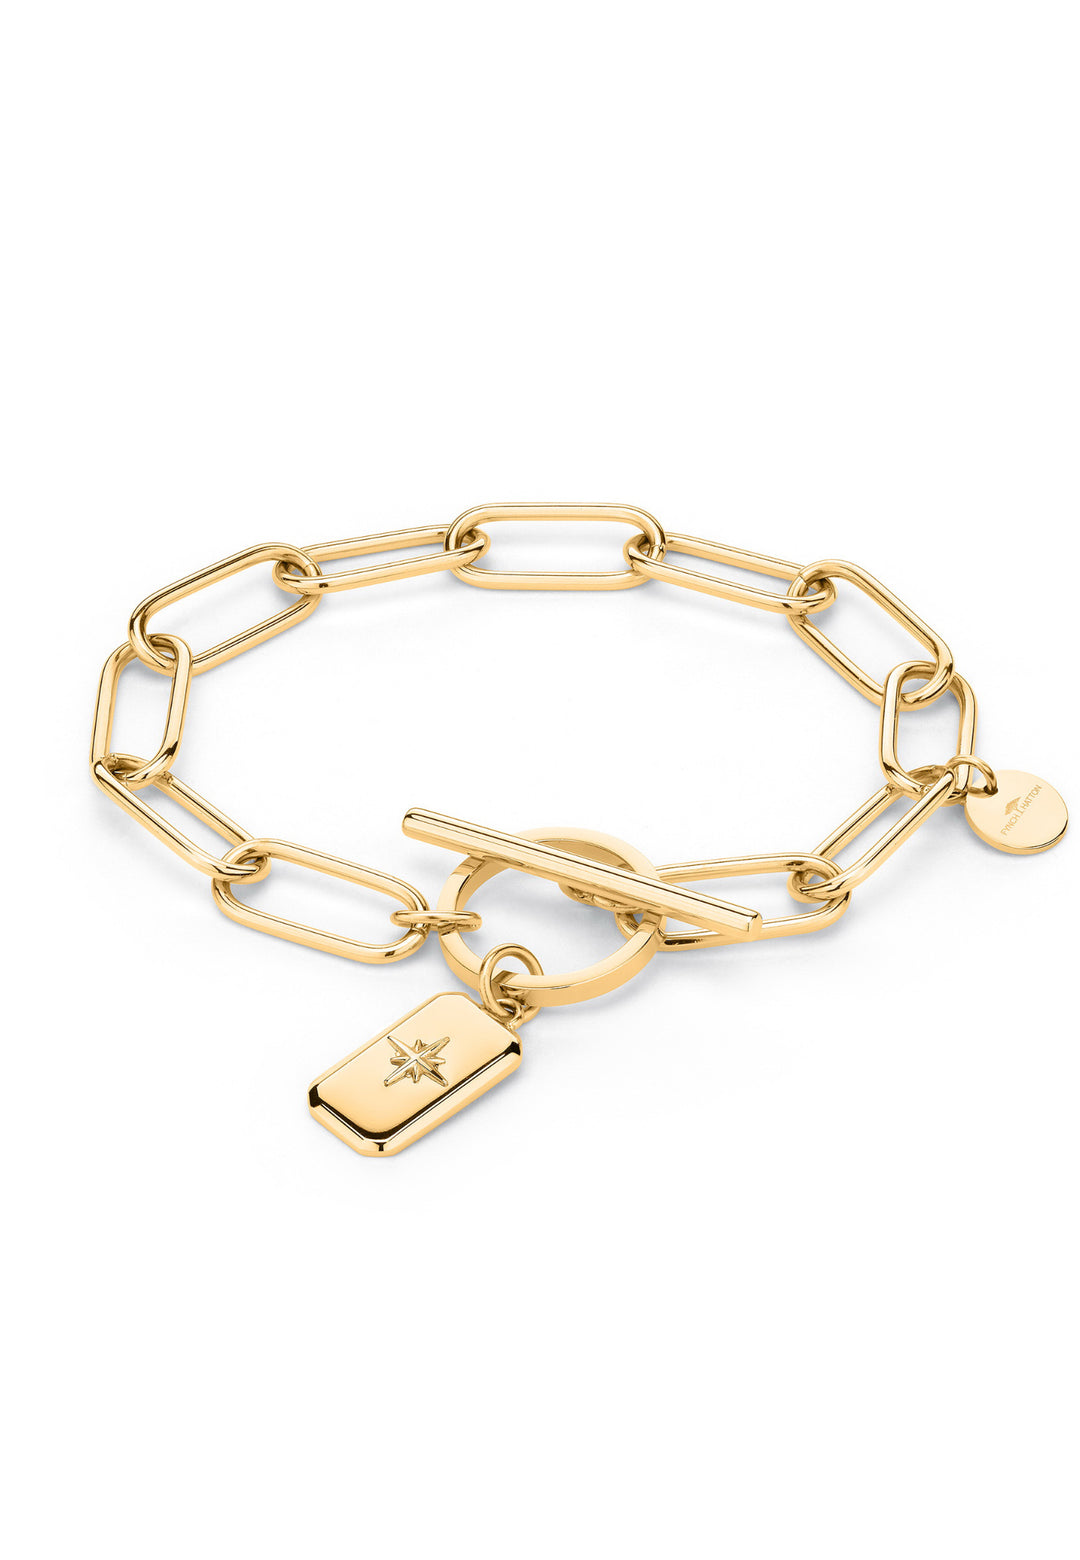 Edelstahl-Armband mit Anhänger | – Shop gold | FYNCH-HATTON Online Offizieller